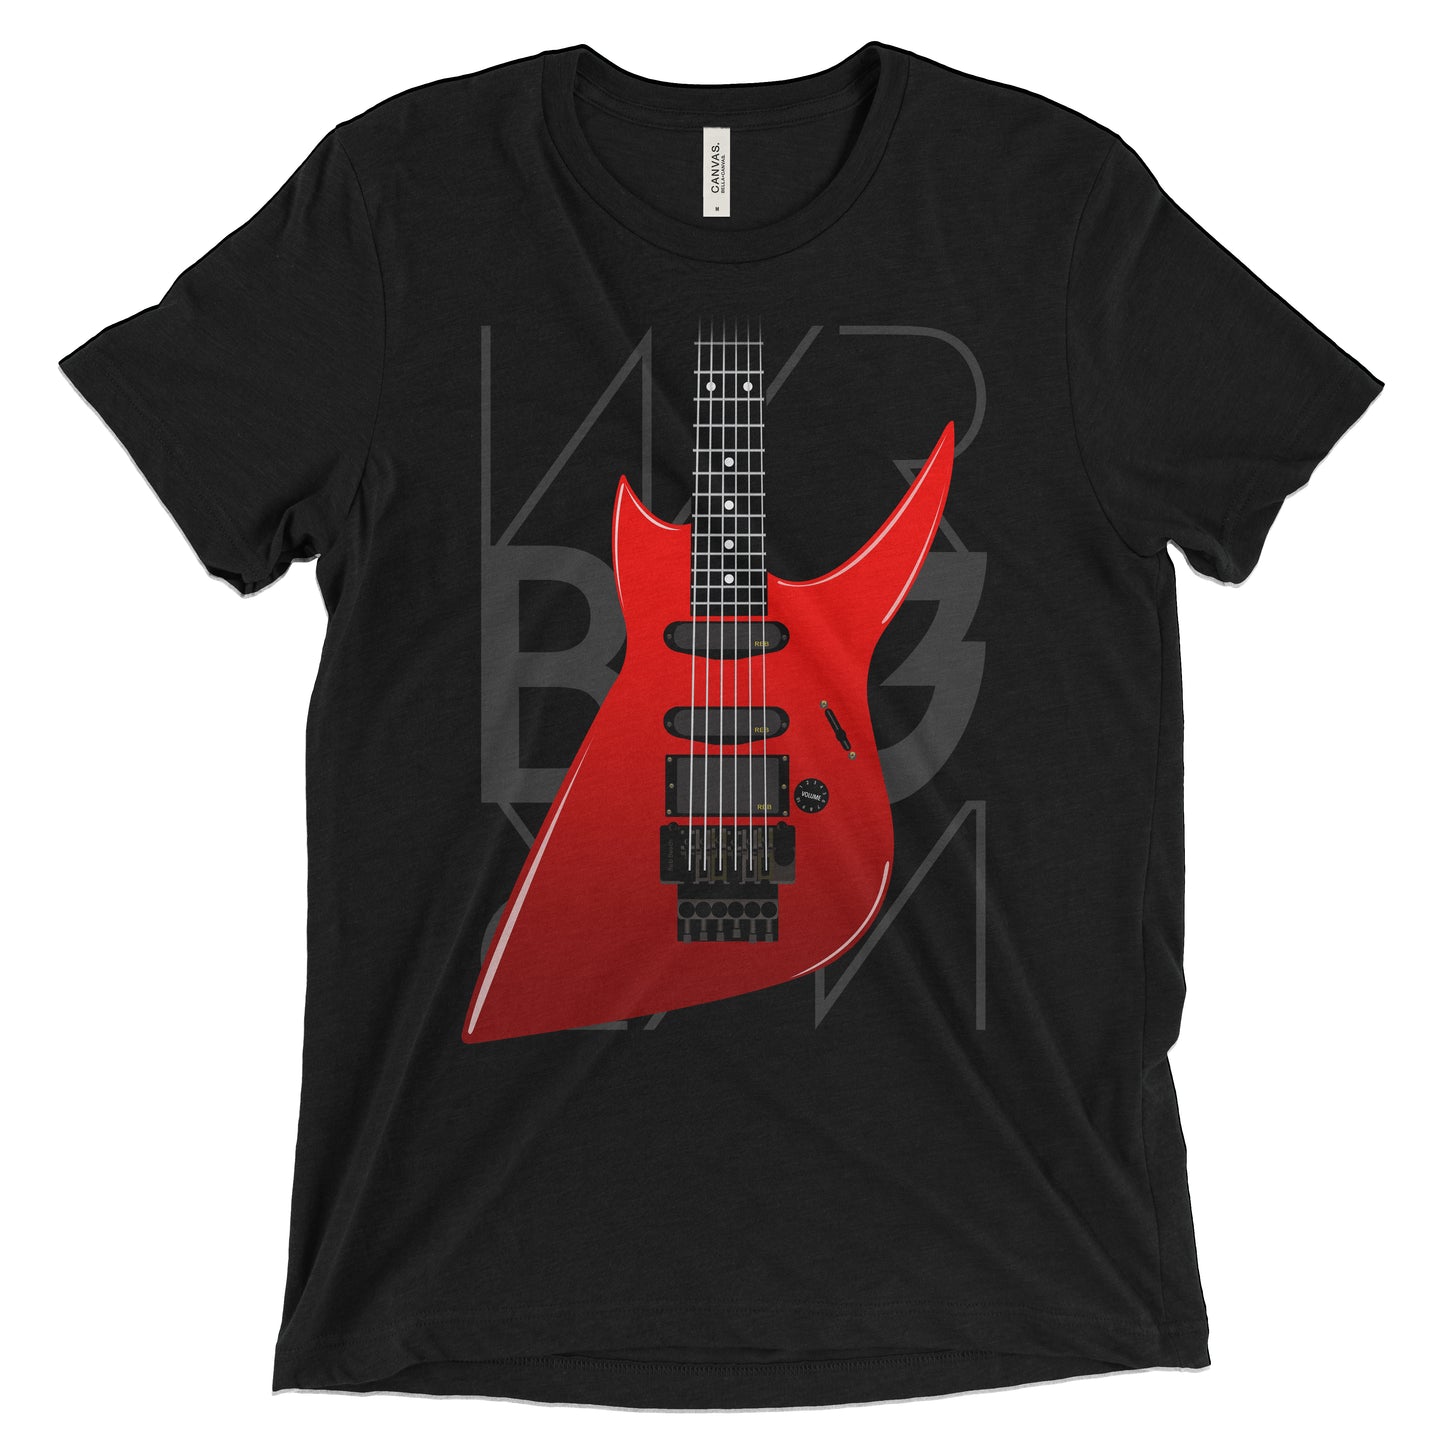 WRB-3 Red Guitar Tee